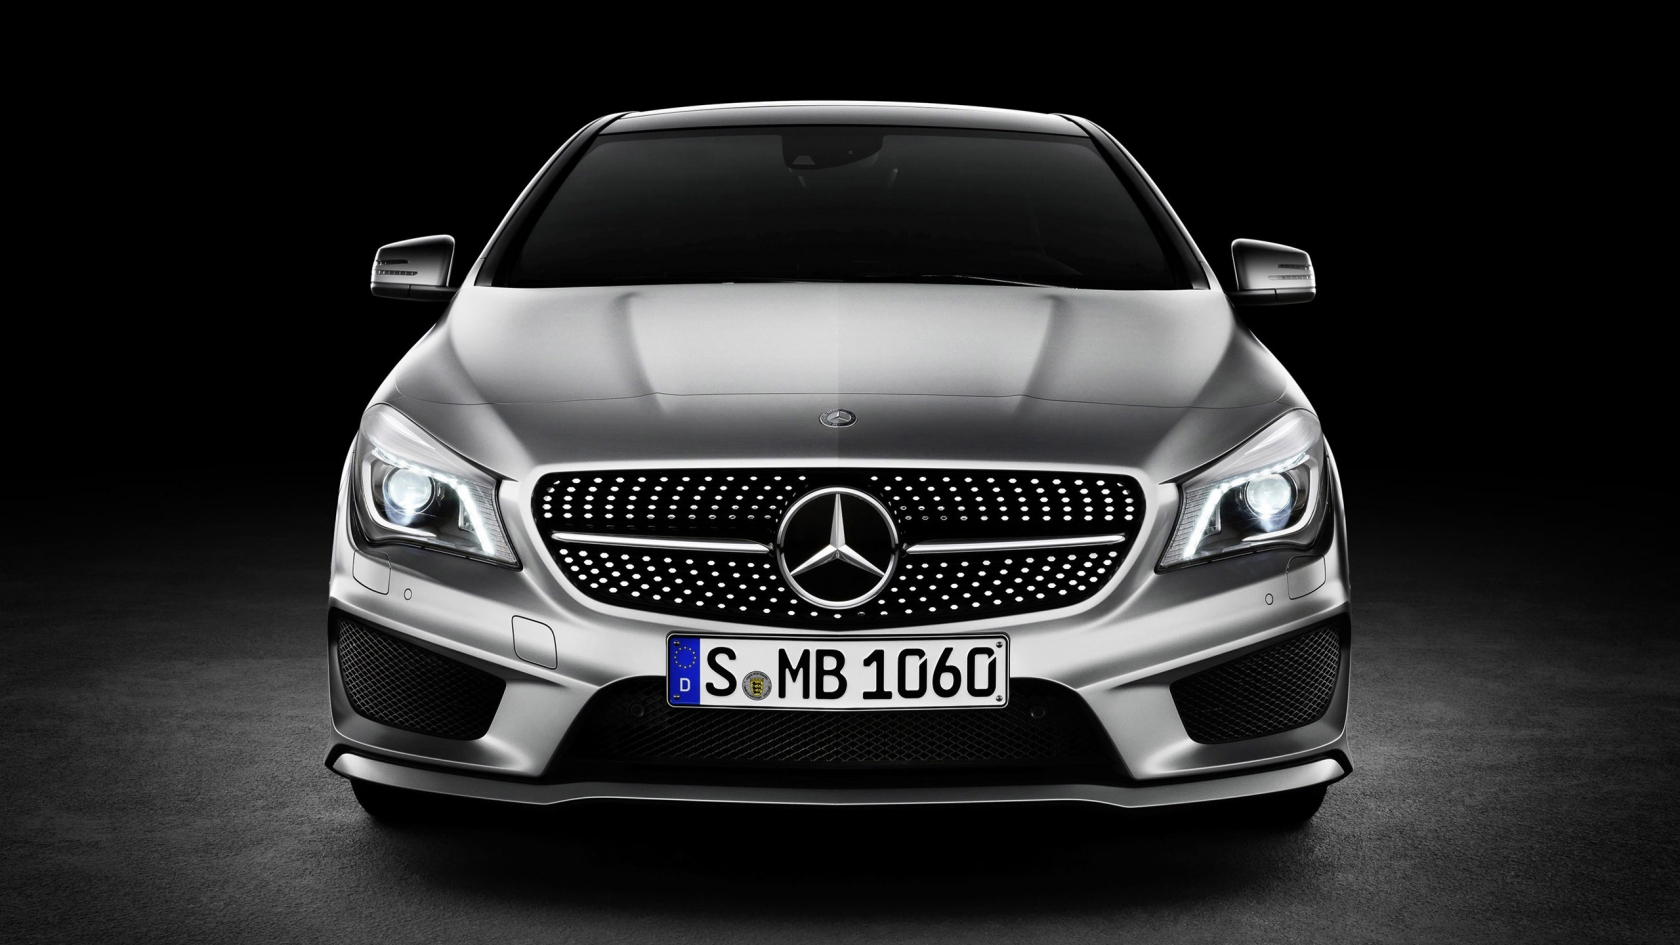 Mercedes Benz CLA Class Studio for 1680 x 945 HDTV resolution